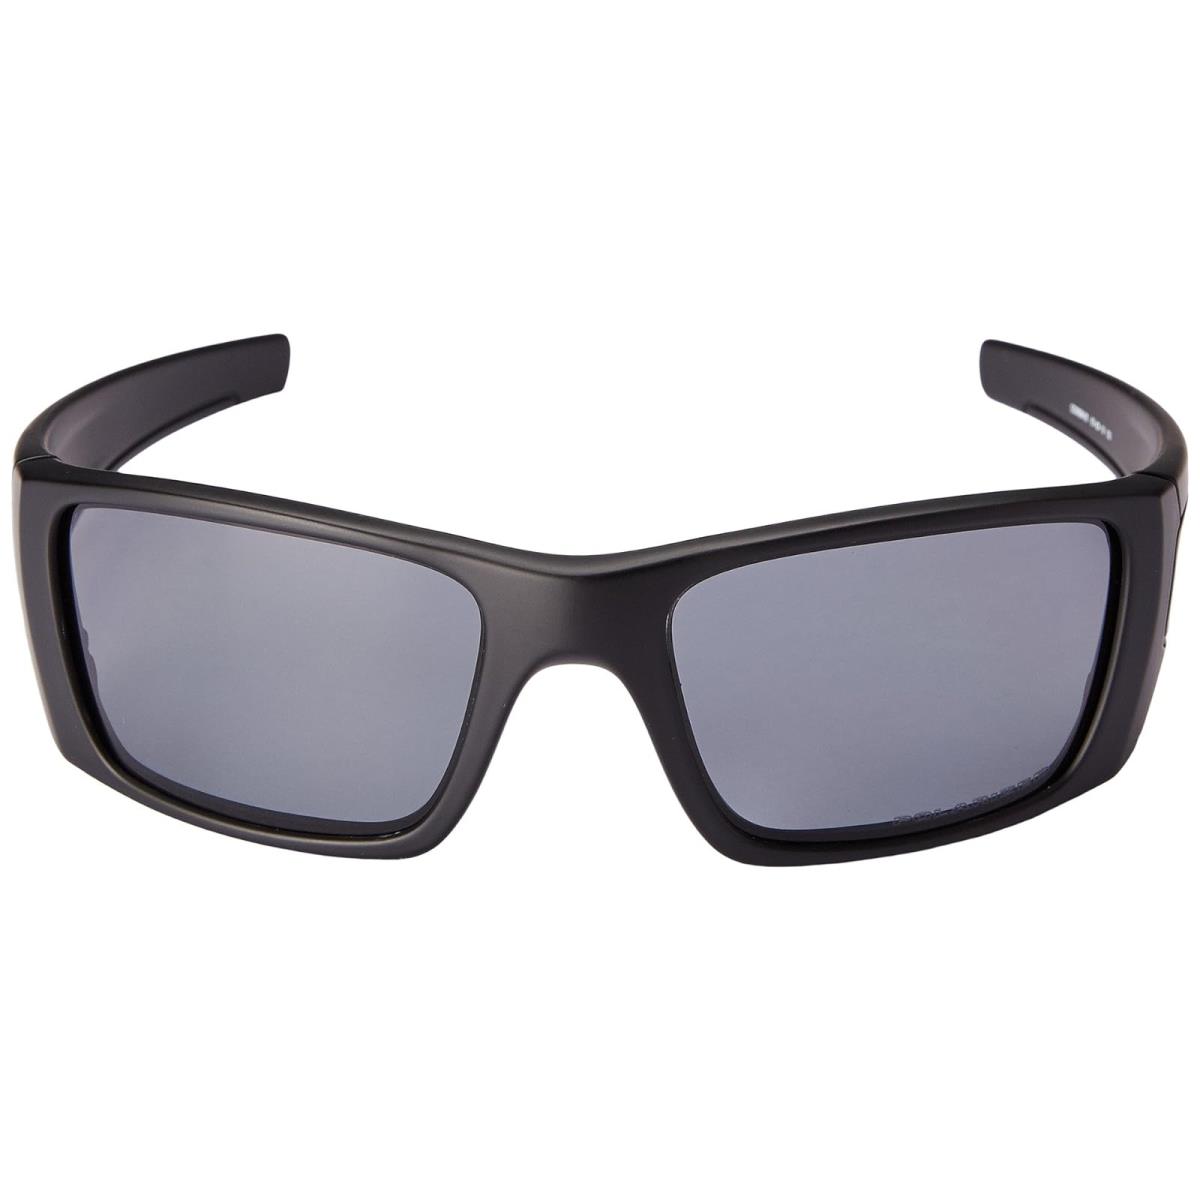 Man`s Sunglasses Oakley Fuel Cell Polarized - Matte Black/Matte Black/Grey Polarized, Frame: Multicolor